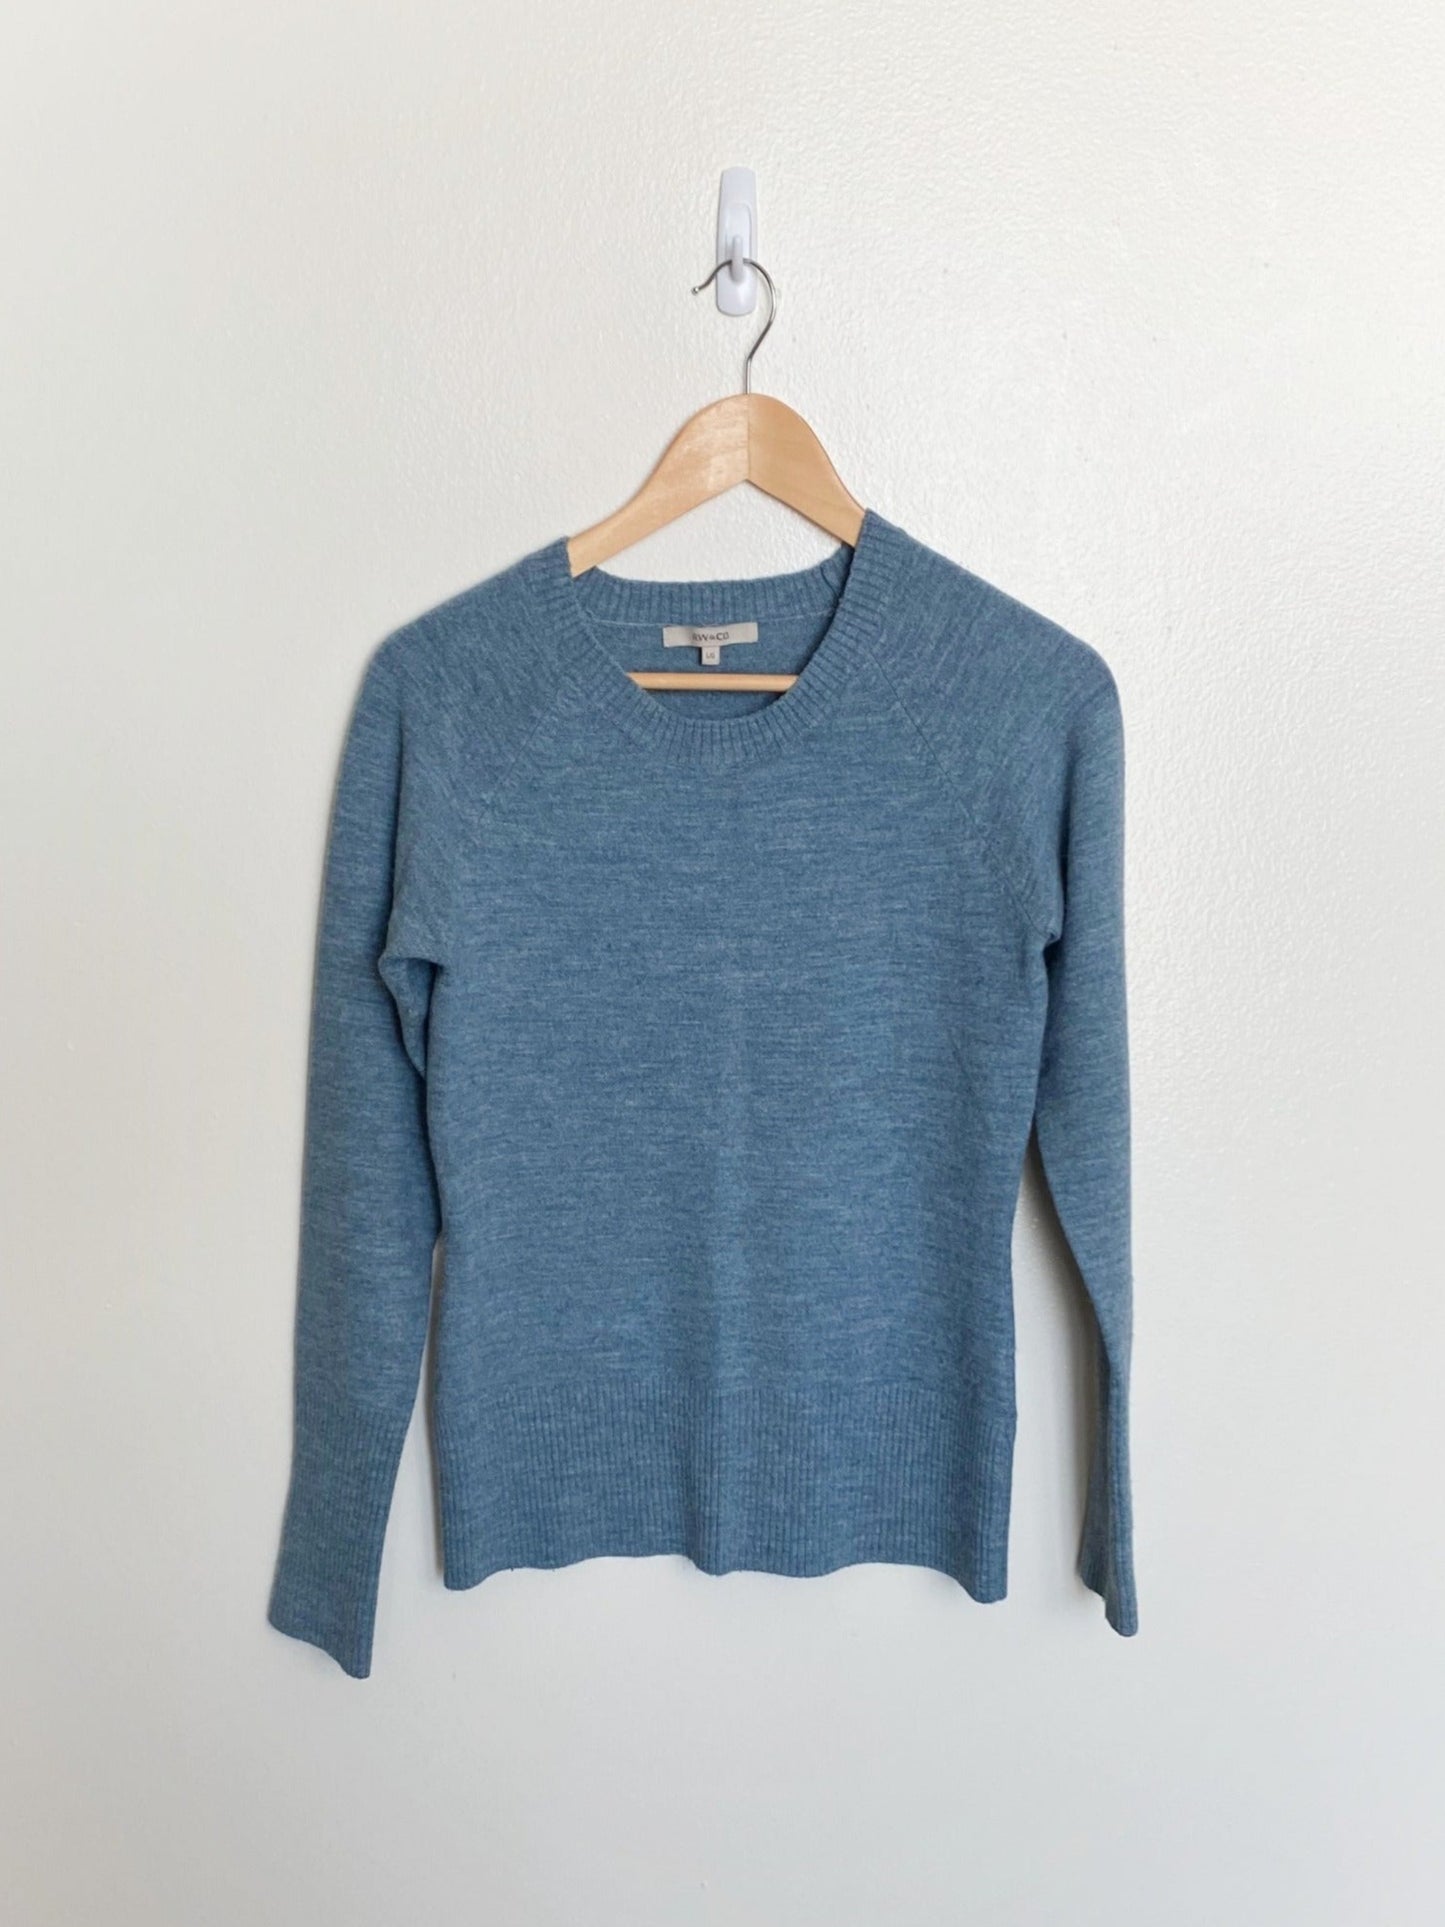 Turquoise Sweater (Large)